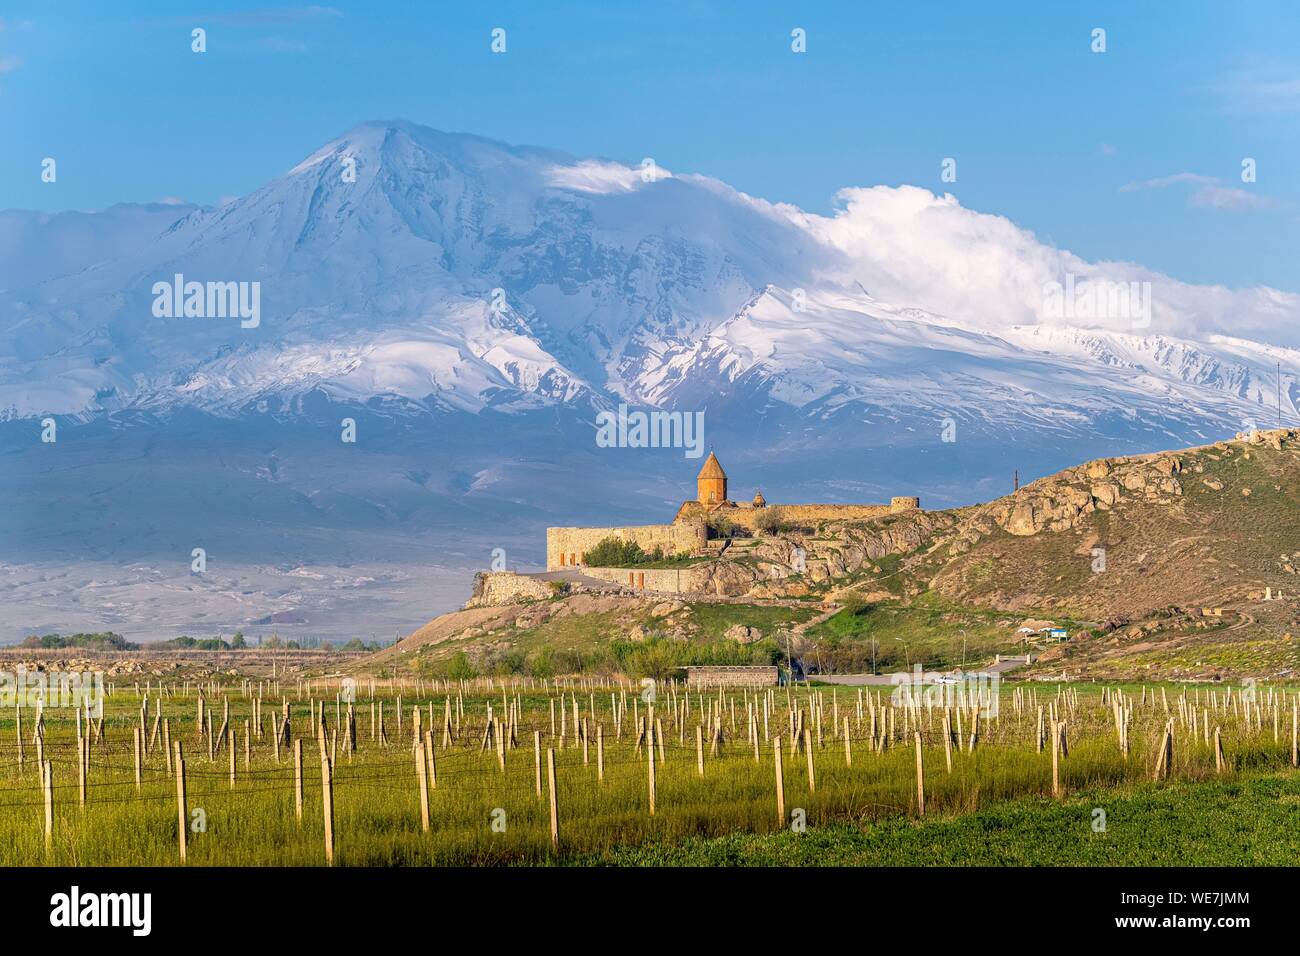 Armenia, Ararat region, Khor Virap monastery and Mount Ararat Stock Photo